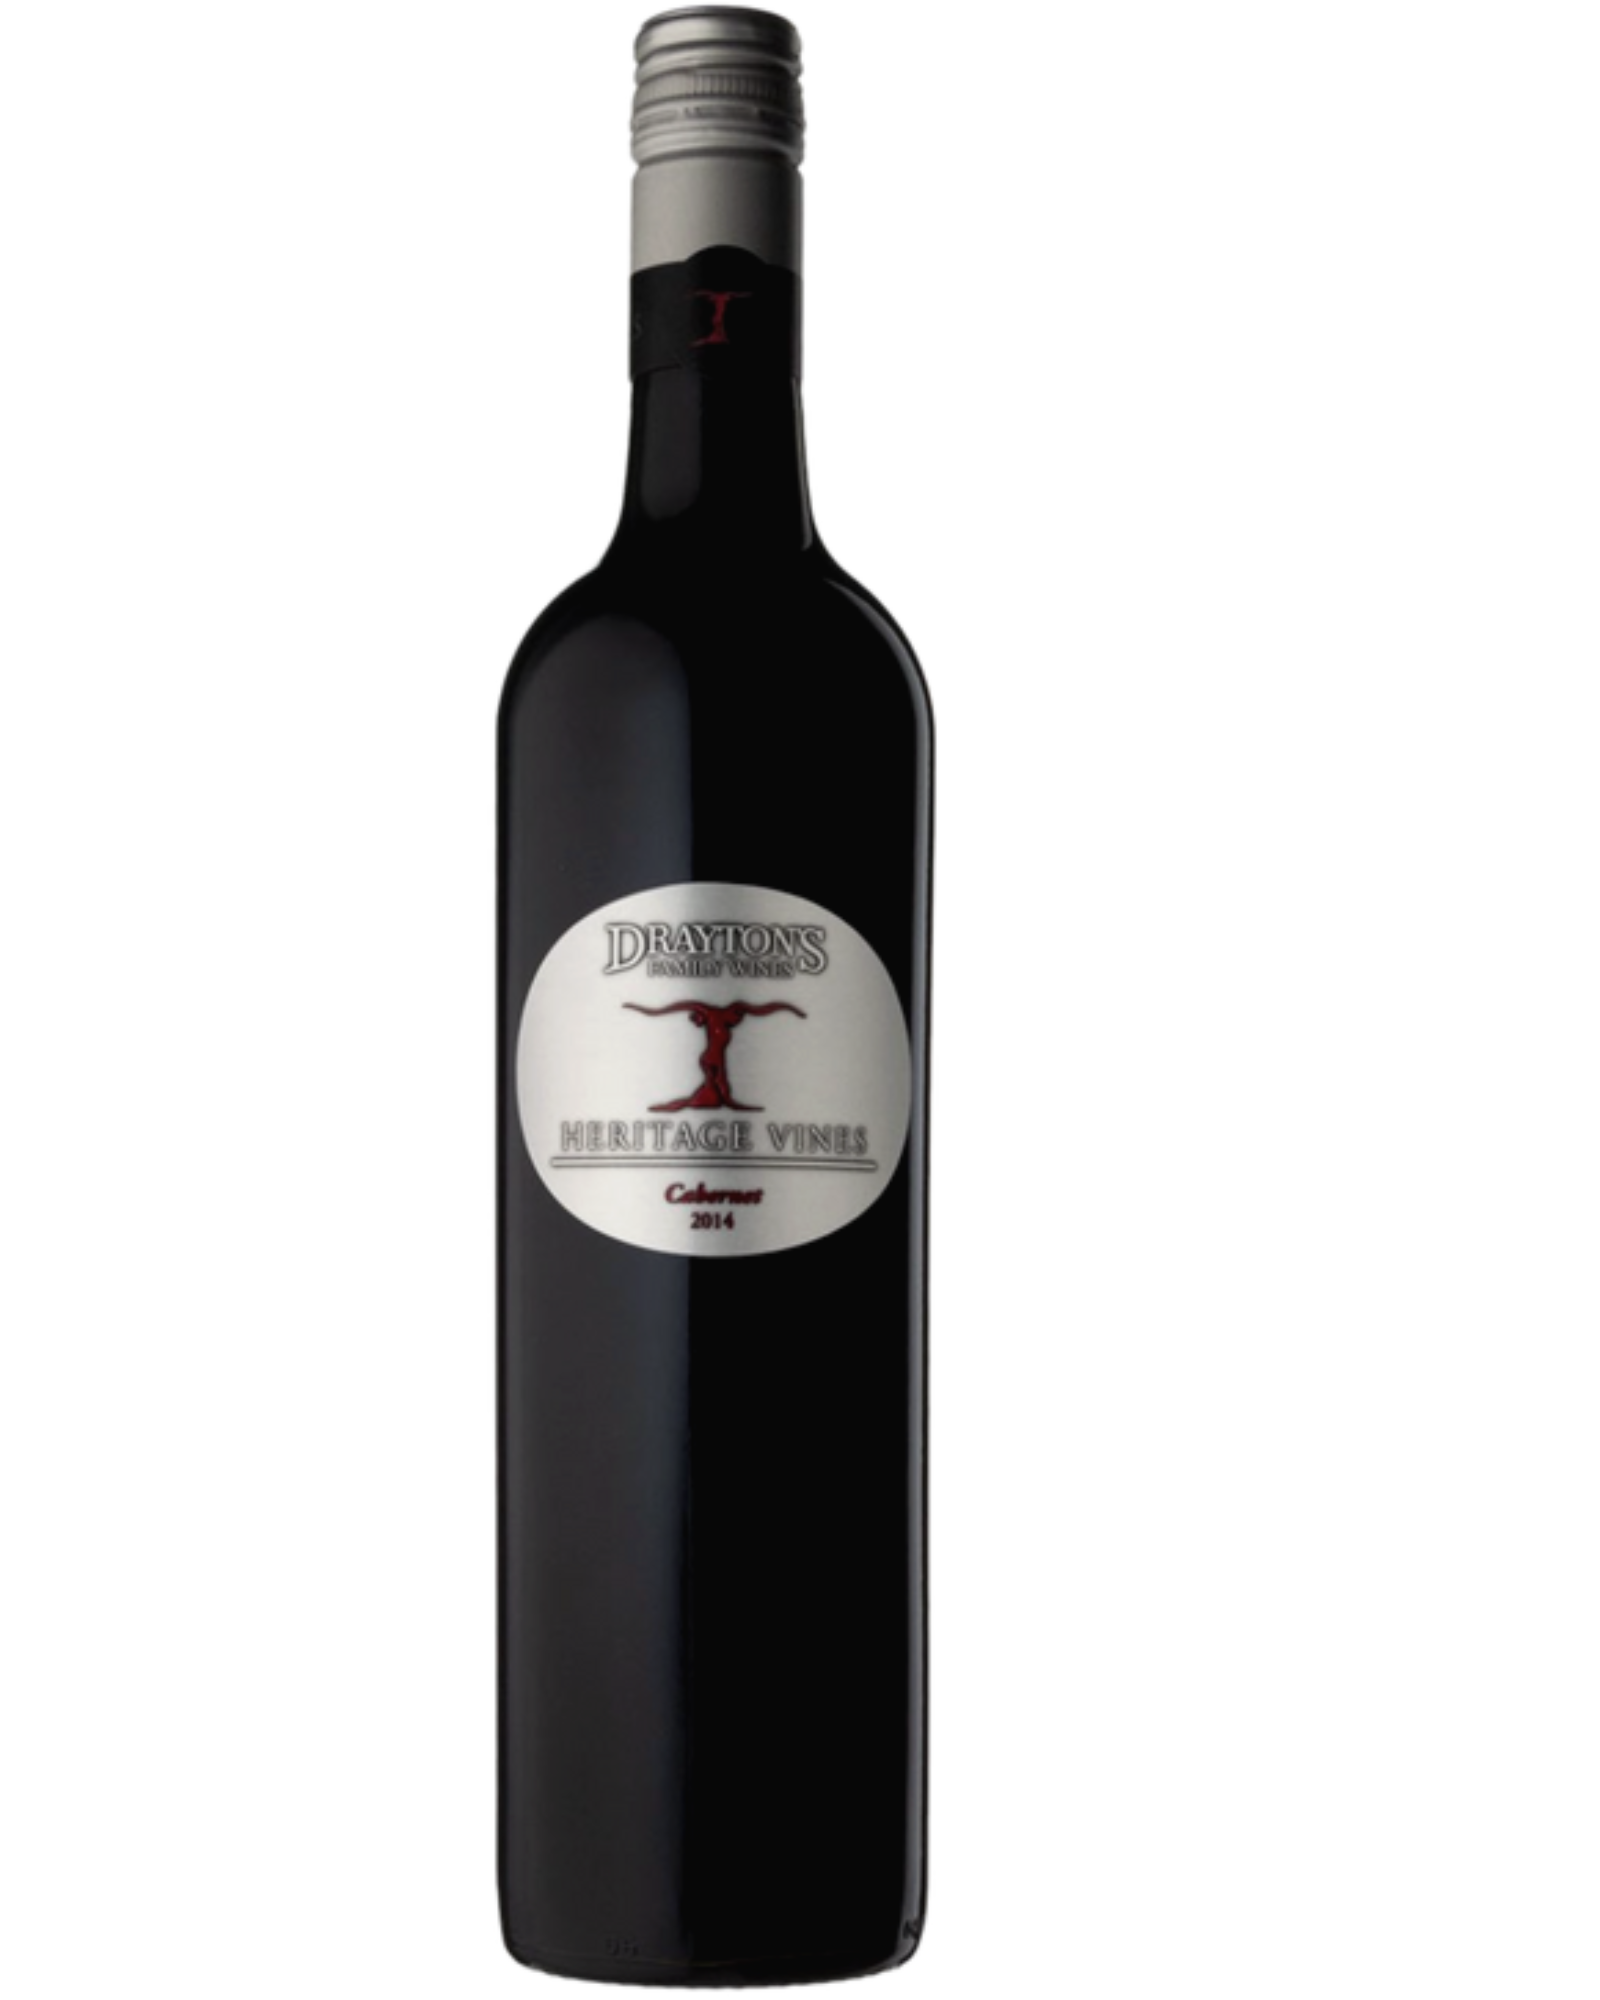 Draytons Heritate Vines Cabernet Sauvignon 2015